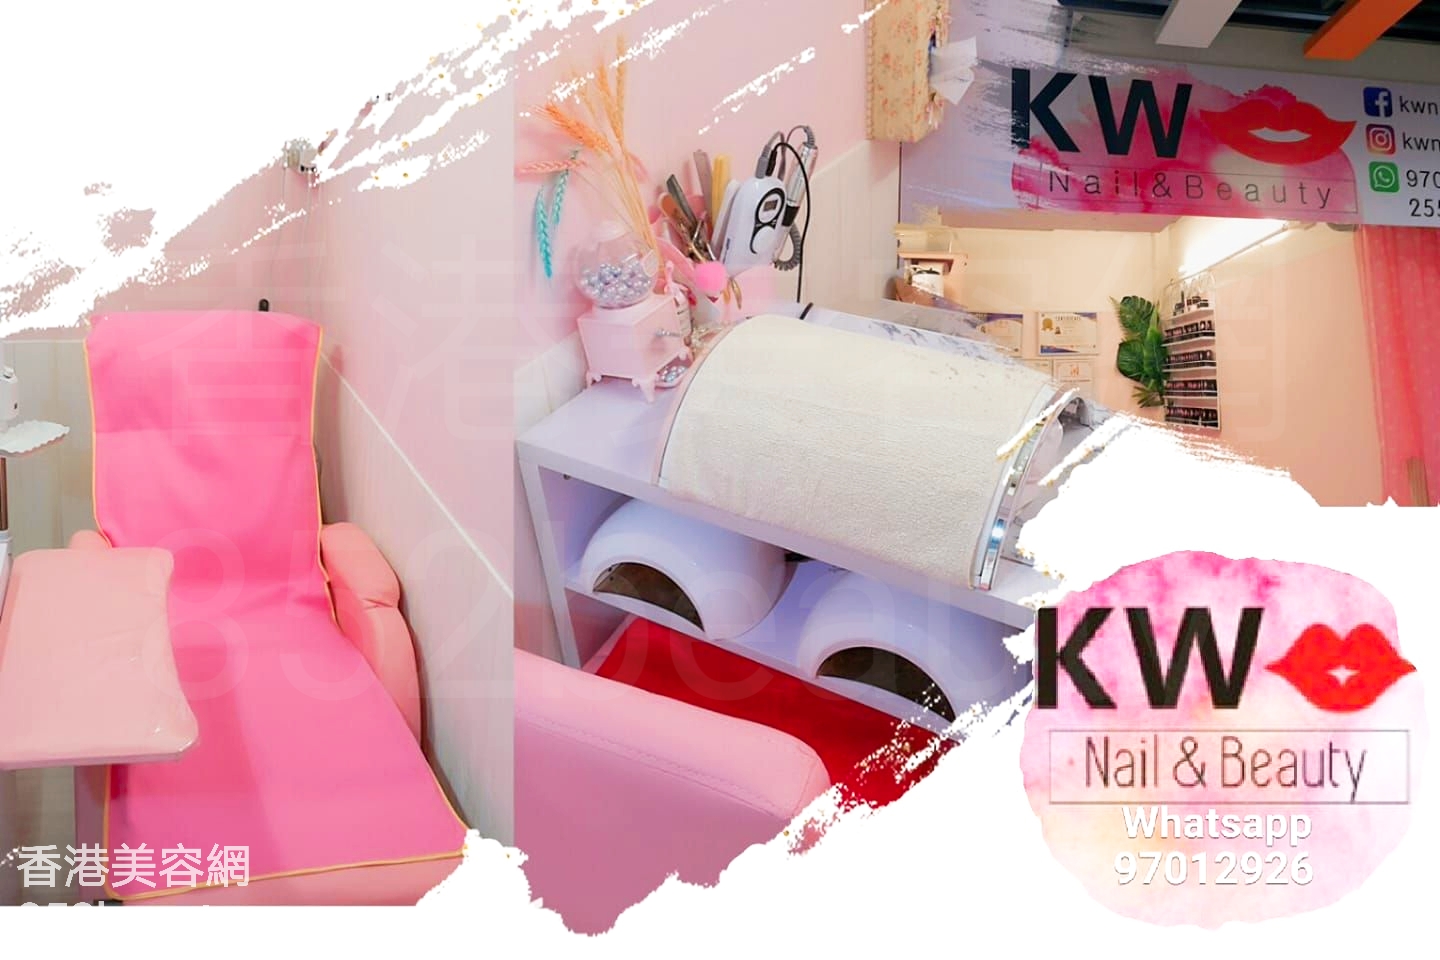 香港美容網 Hong Kong Beauty Salon 美容院 / 美容師: KW Nail & Beauty